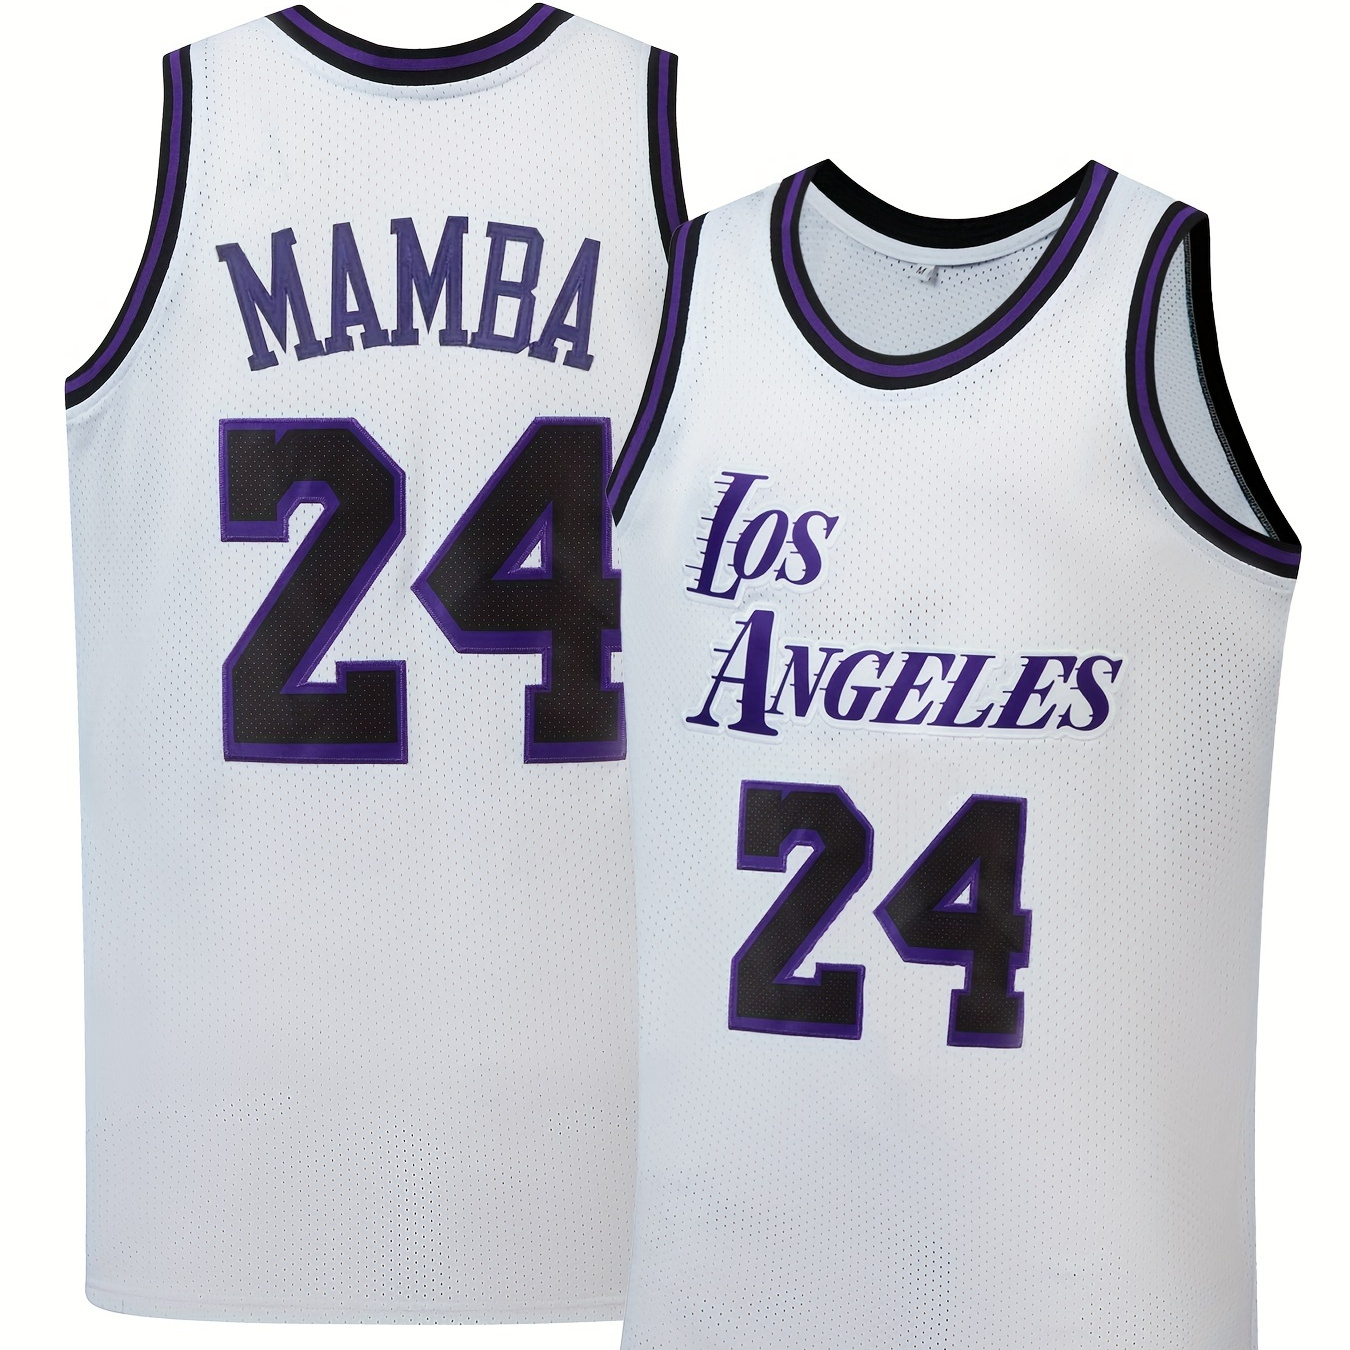 LOS ANGELES - Maillot Basket - blanc Taille M Couleur Blanc